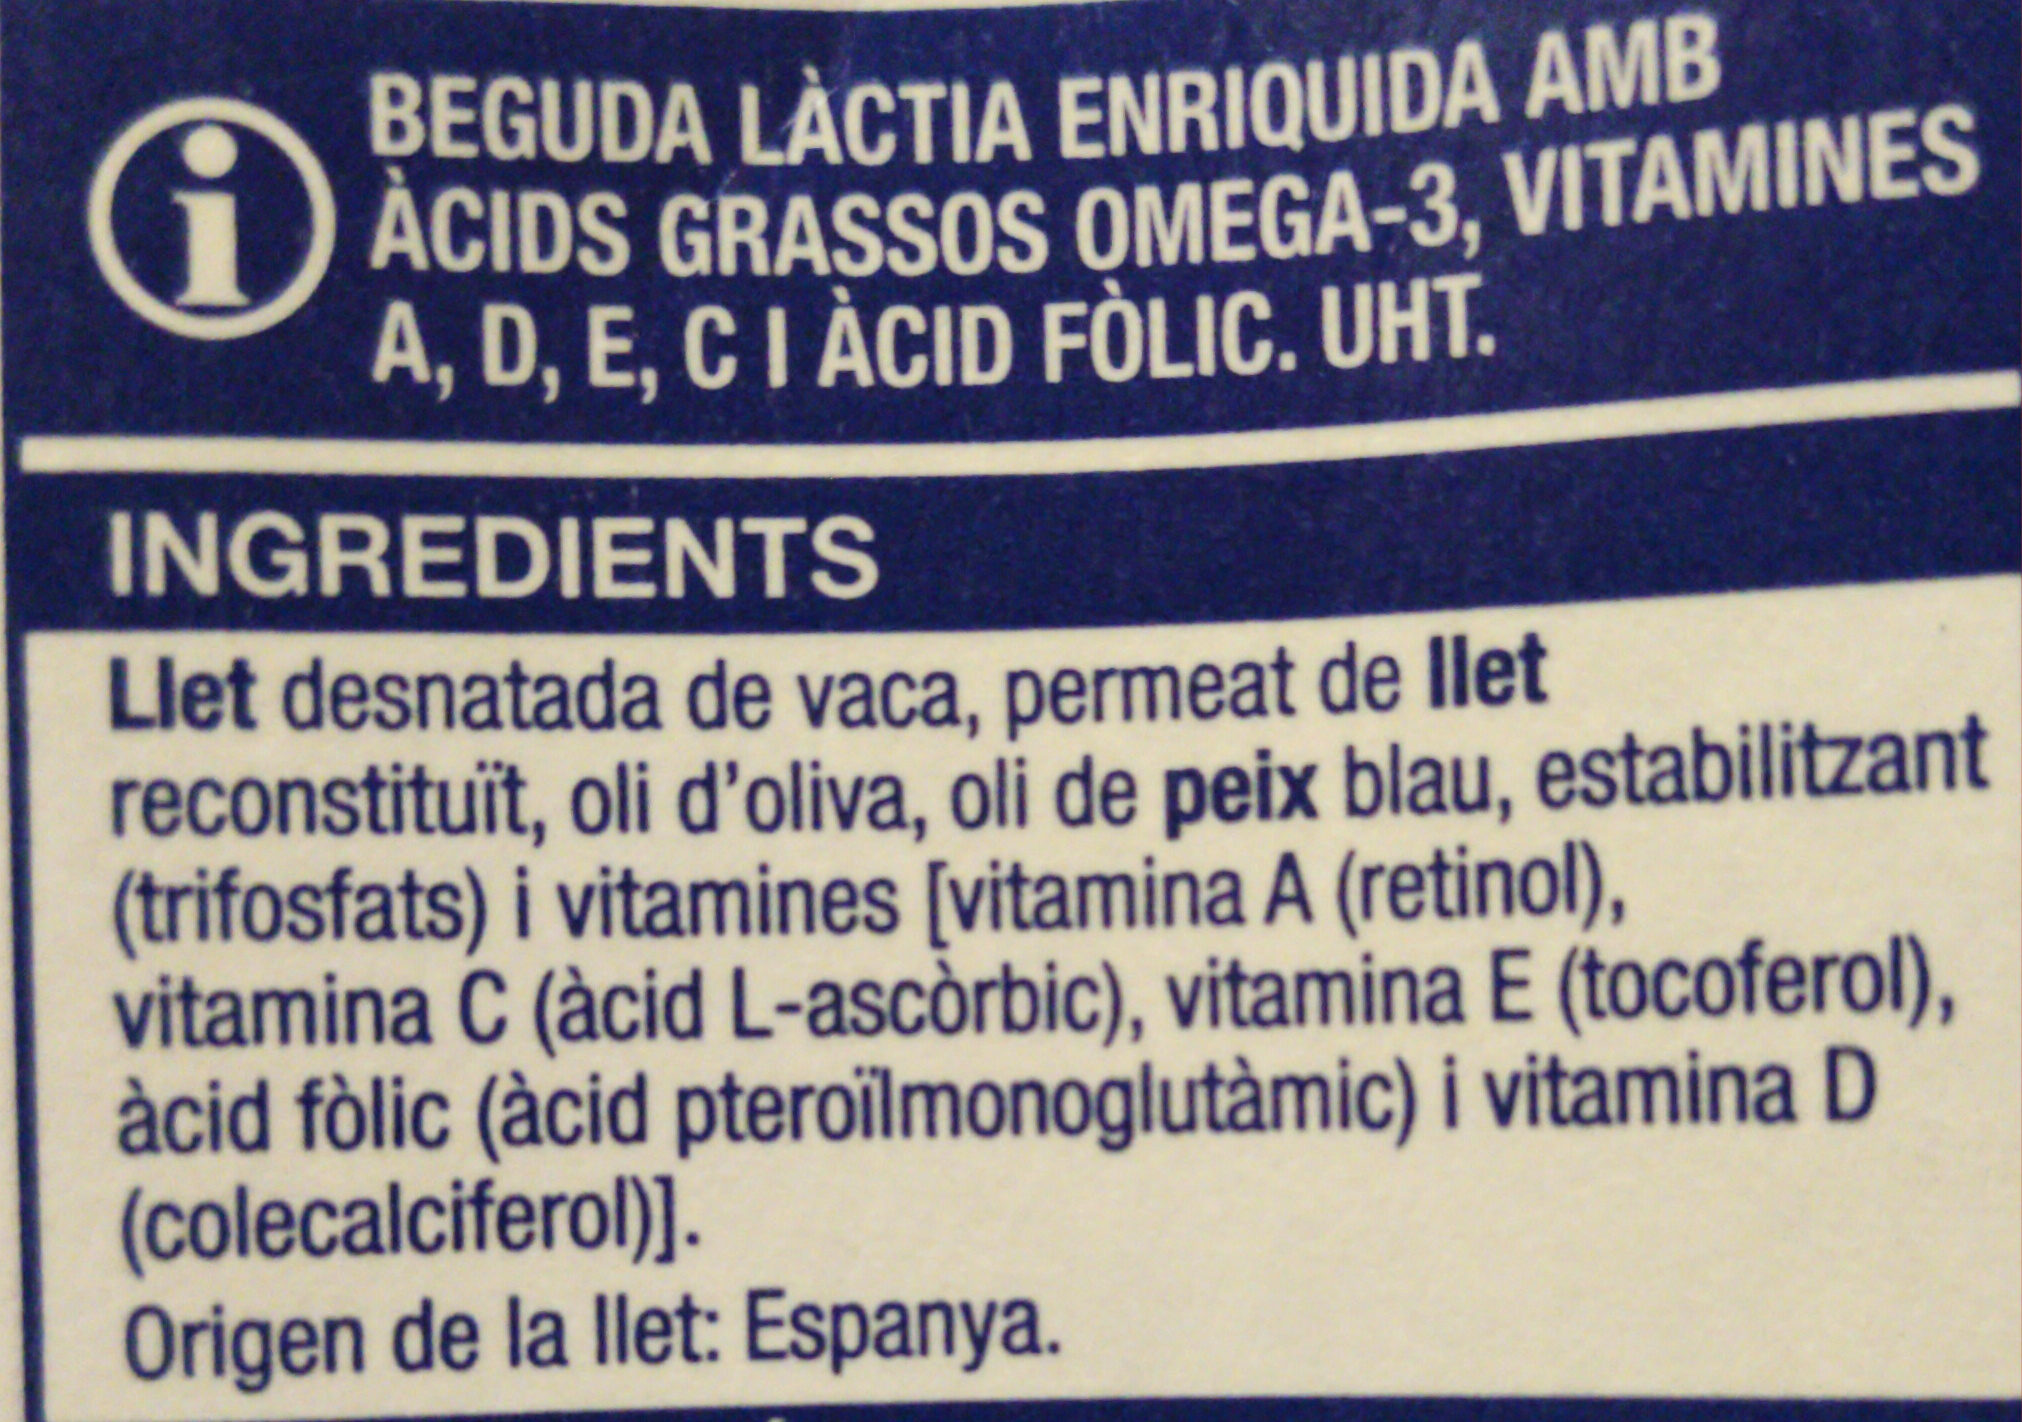 Beguda làctia omega-3 - Ingredients